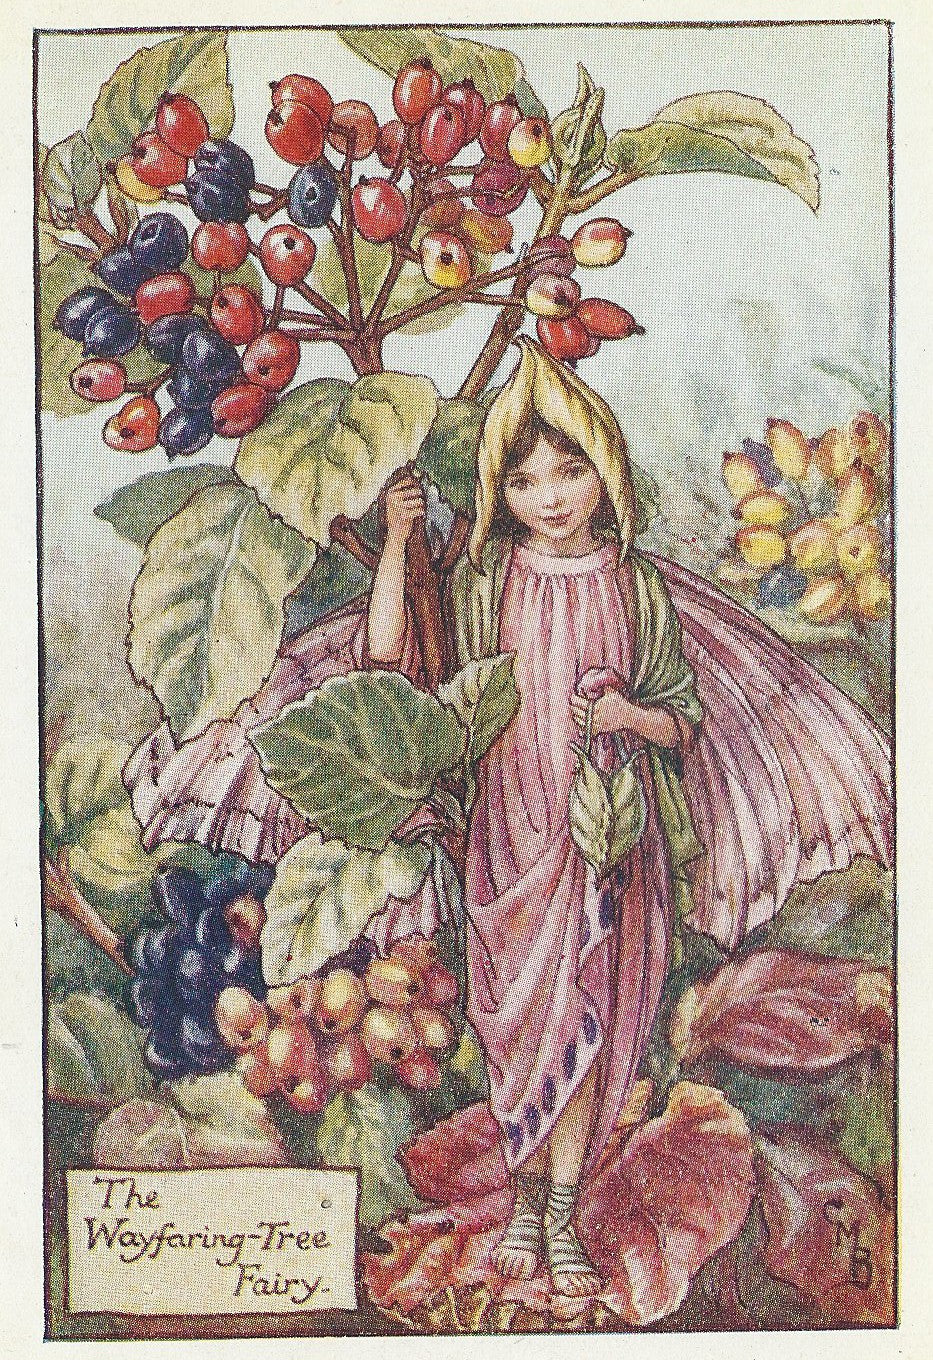 Wayfaring Tree Flower Fairy guaranteed original vintage print